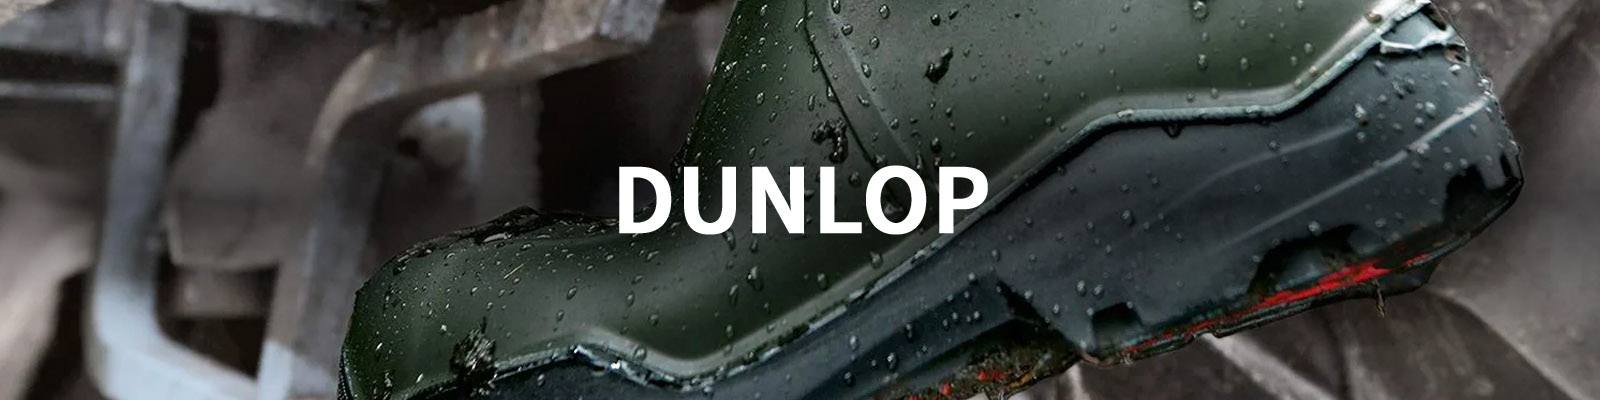 Dunlop Wellington Boots